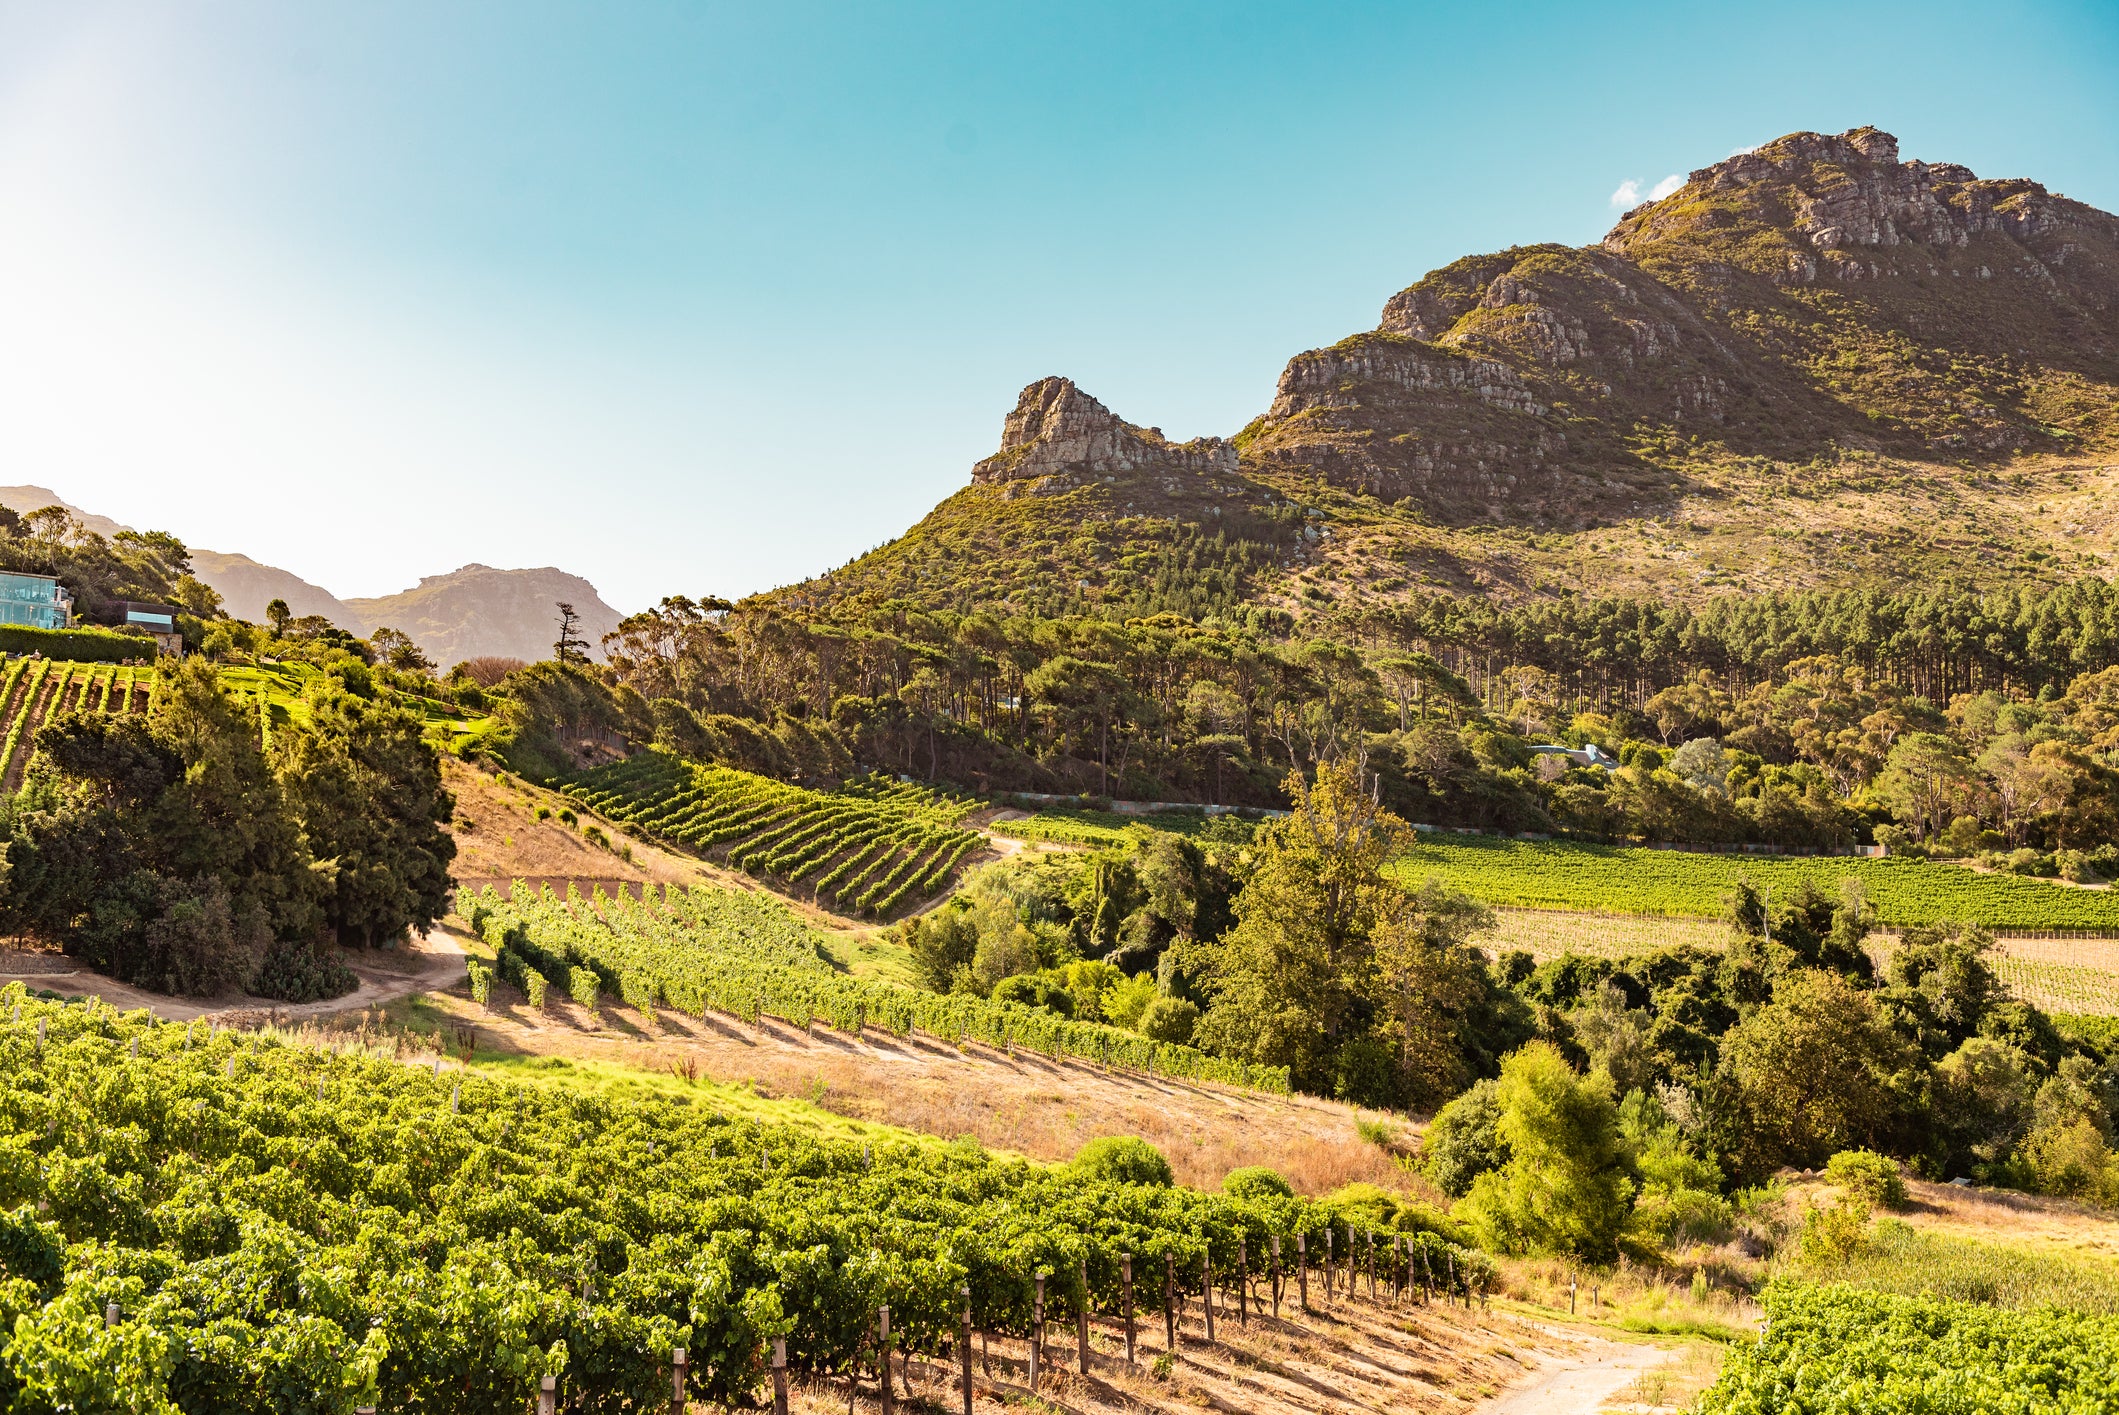 From Stellenbosch and Franschhoek, Cape Town’s vineyards produce a fine cabernet sauvignon